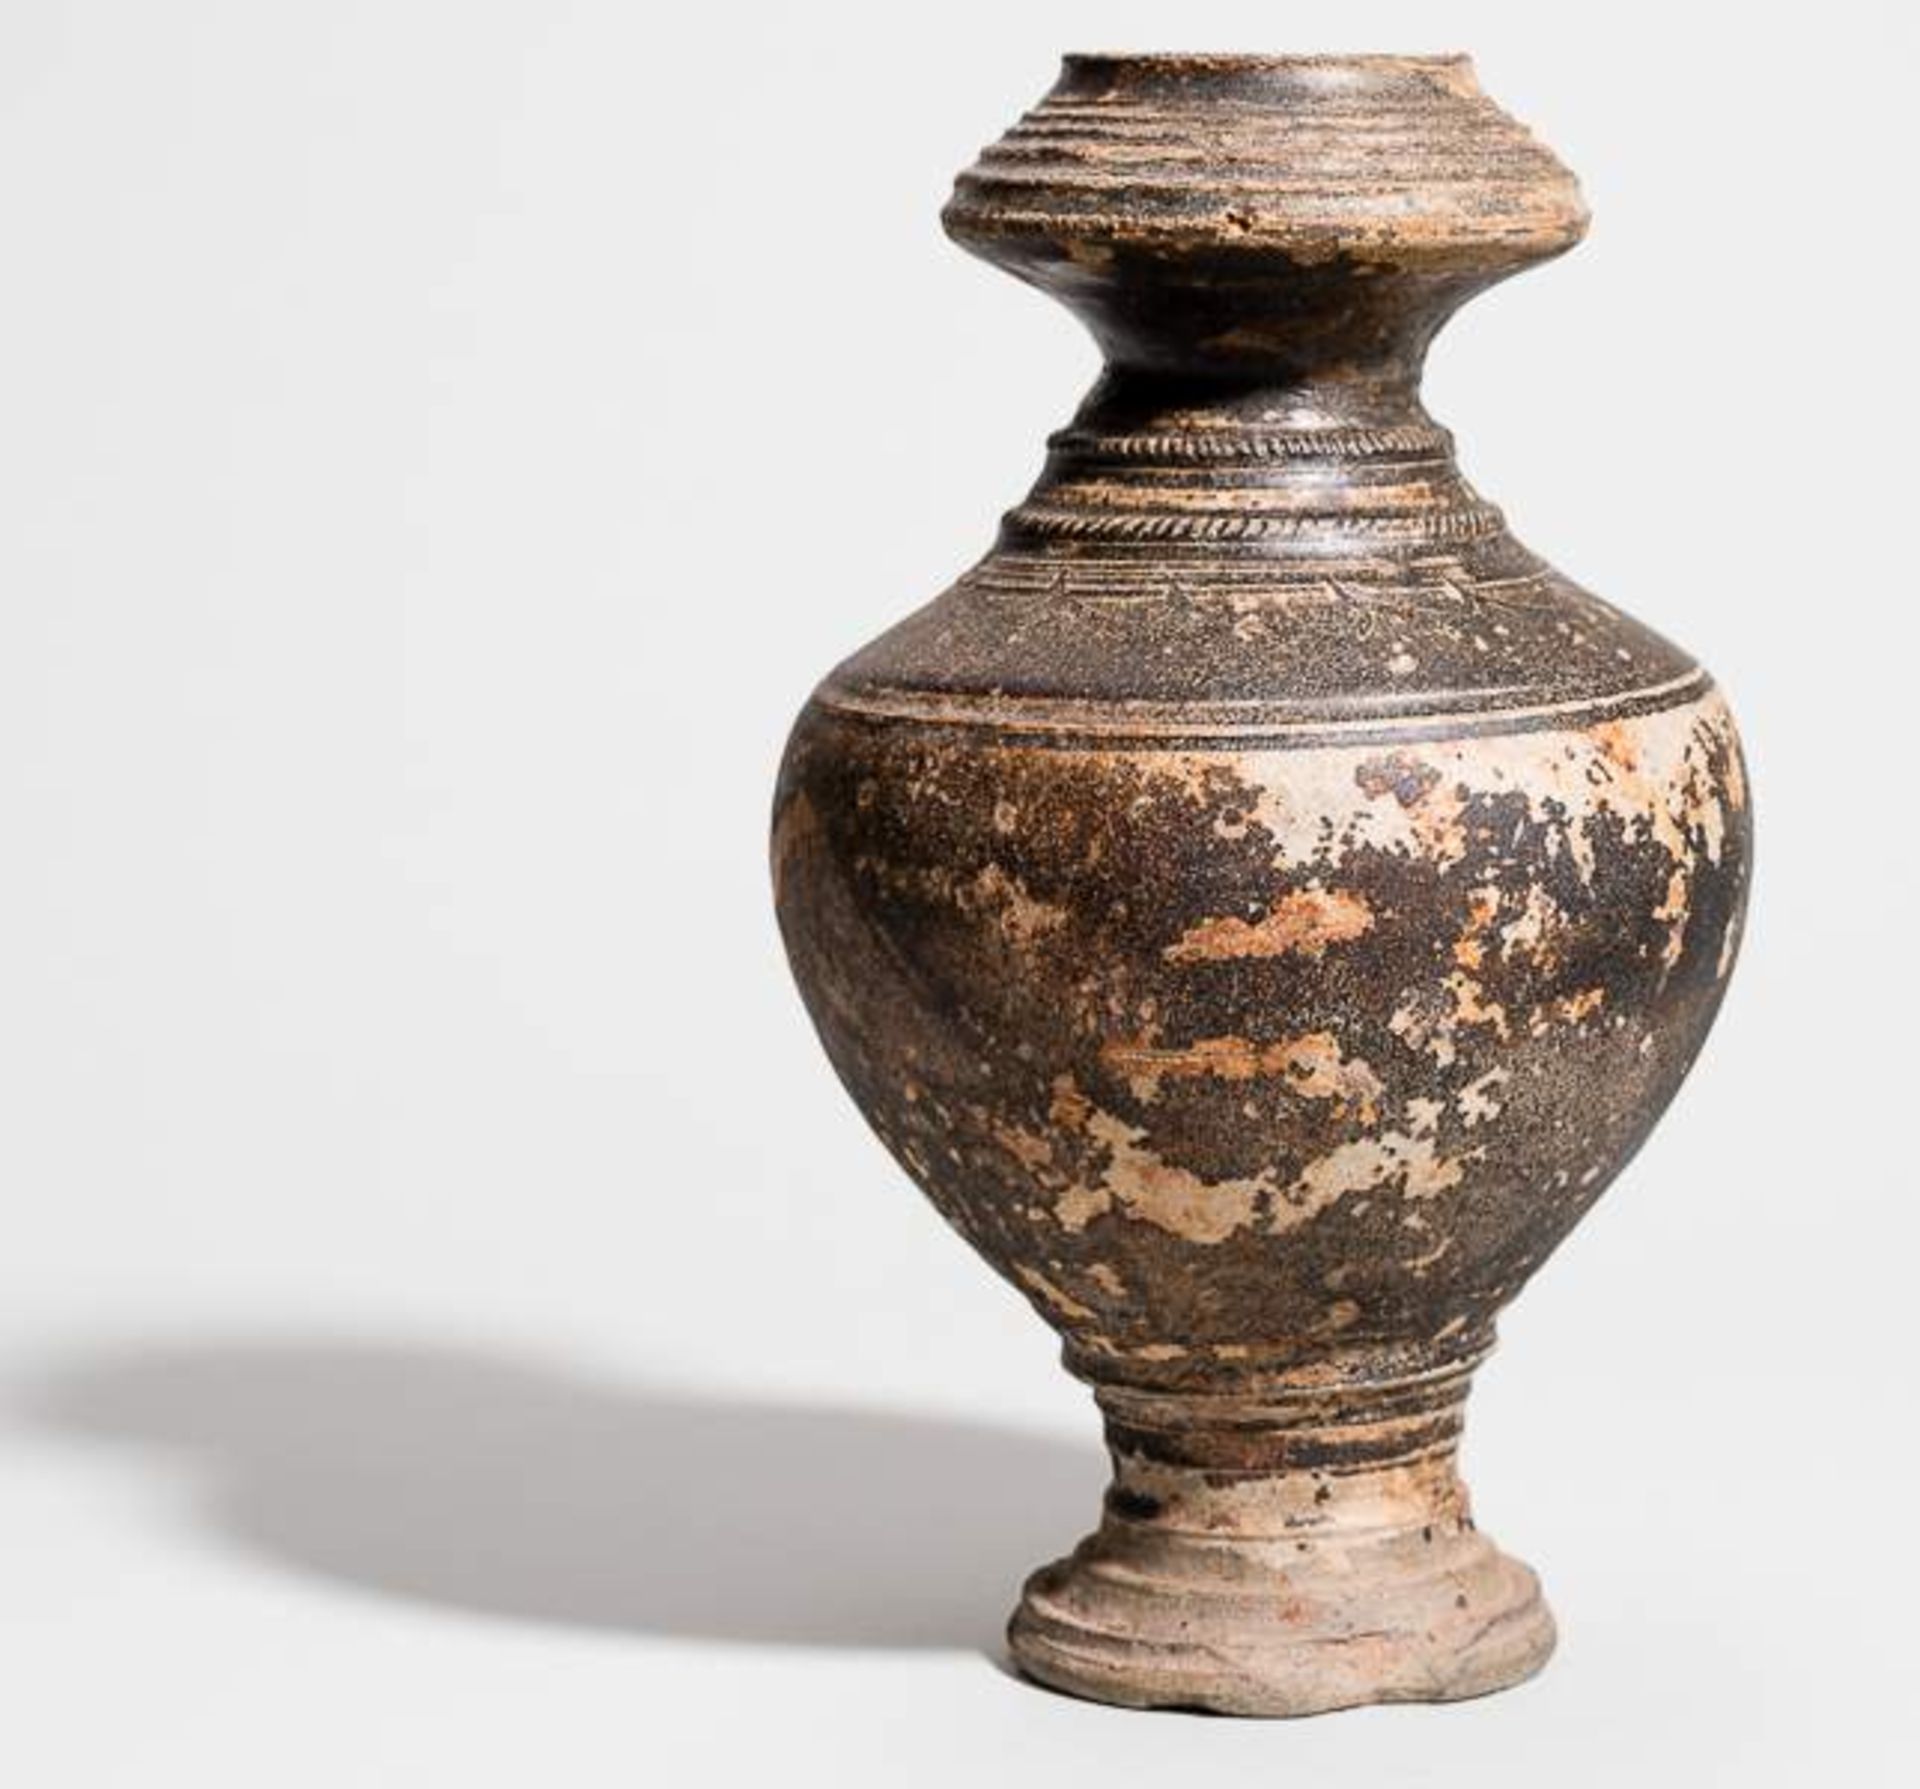 VASENFÖRMIGES GEFÄSS Keramik. Kambodscha, Altes Königreich Khmer, 11. bis 12. Jh. Seltener Typus, - Image 8 of 11